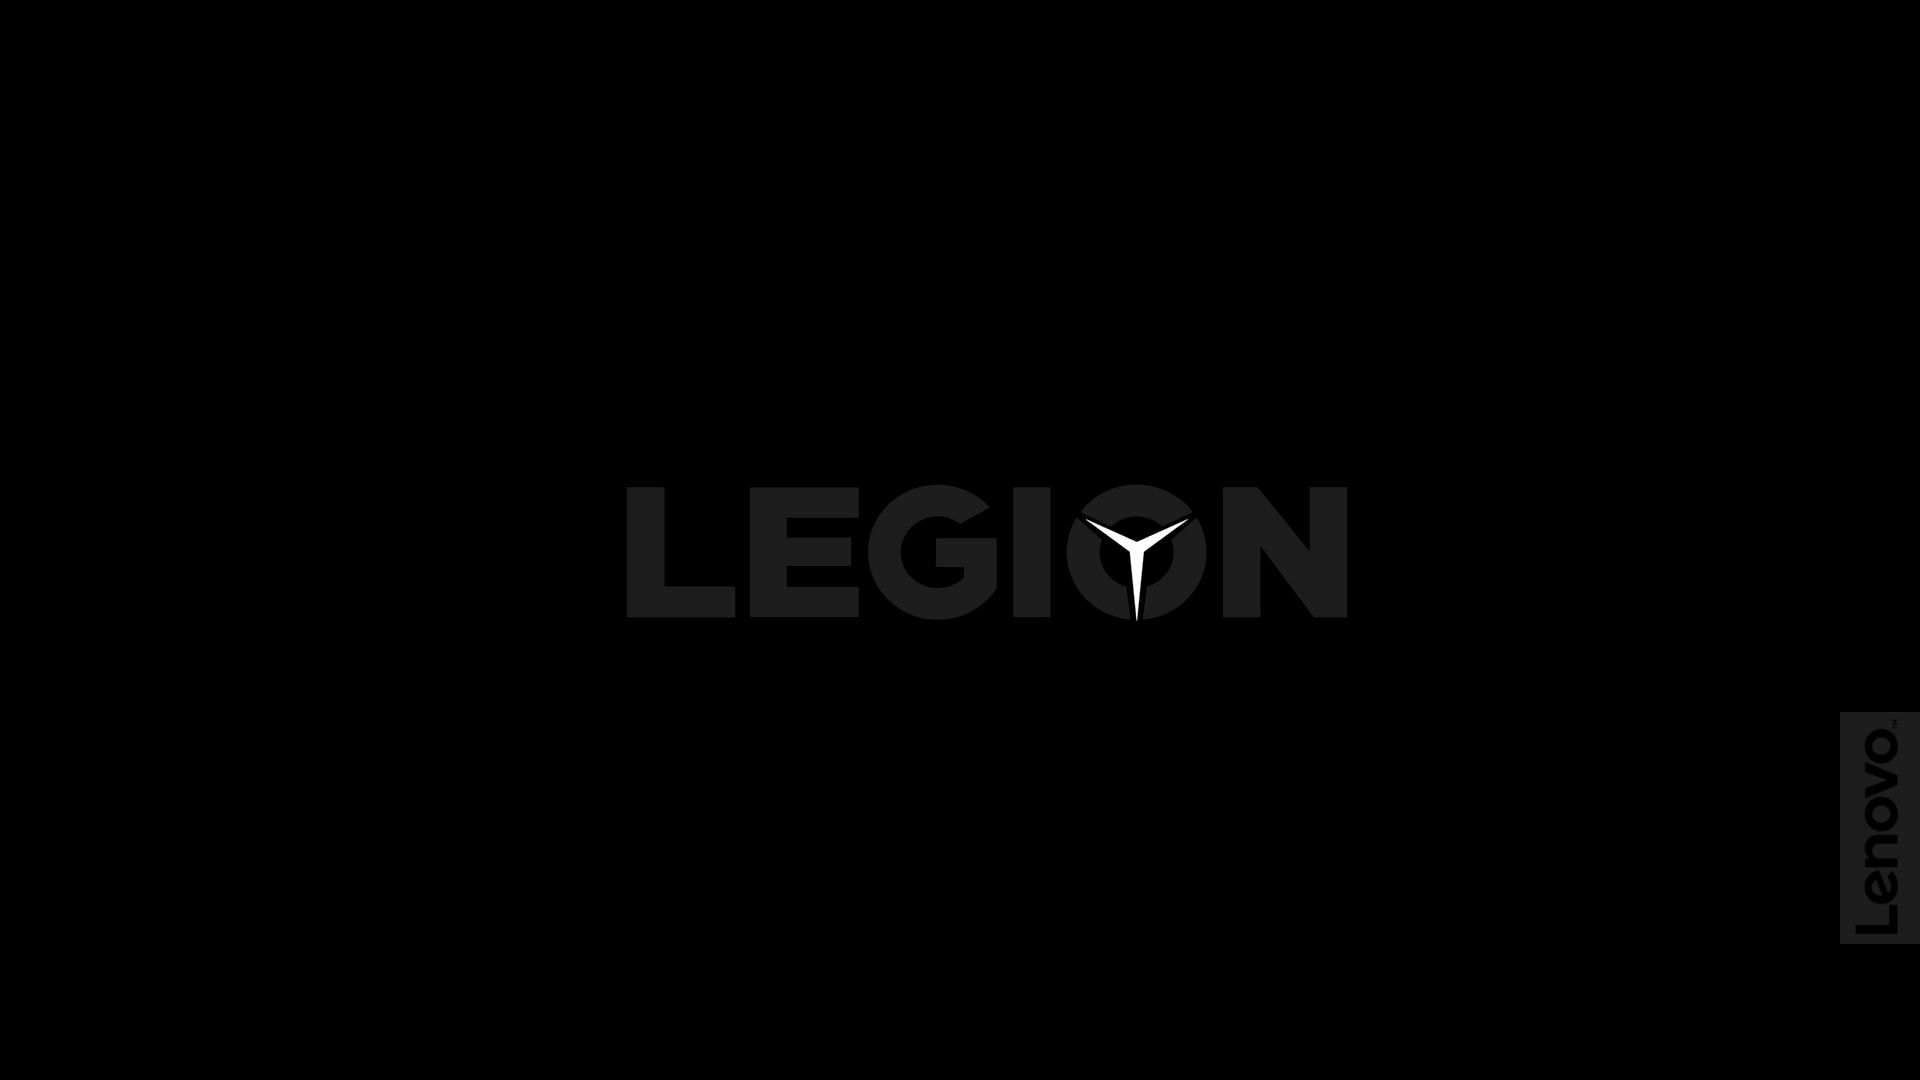 Legion Wallpapers